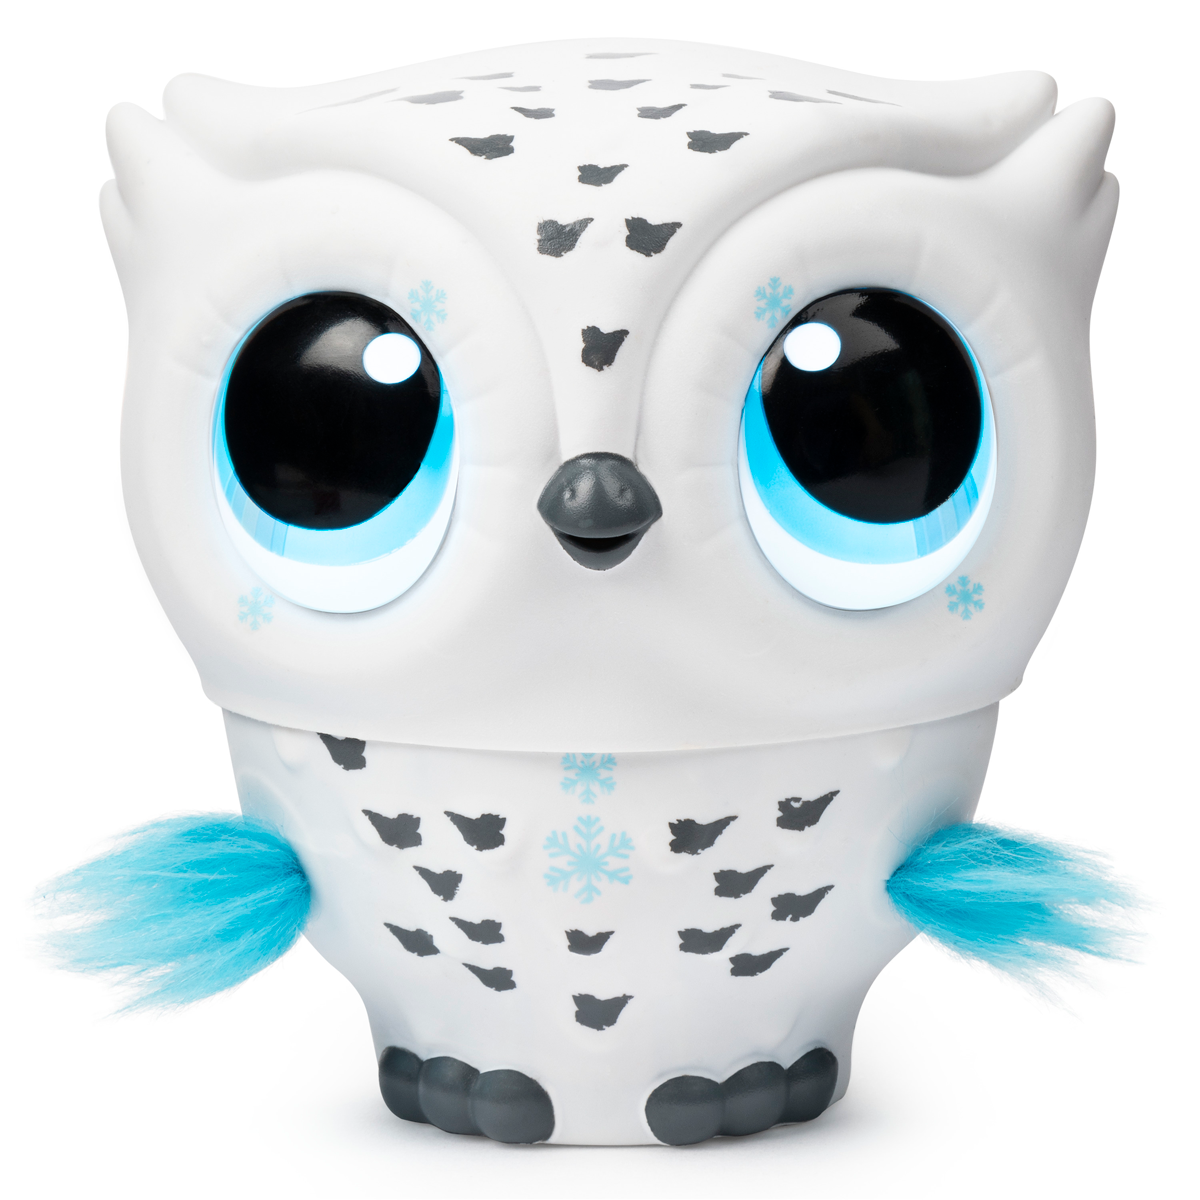 Owleez Flying Baby Owl Interactive Toy - White - Plush